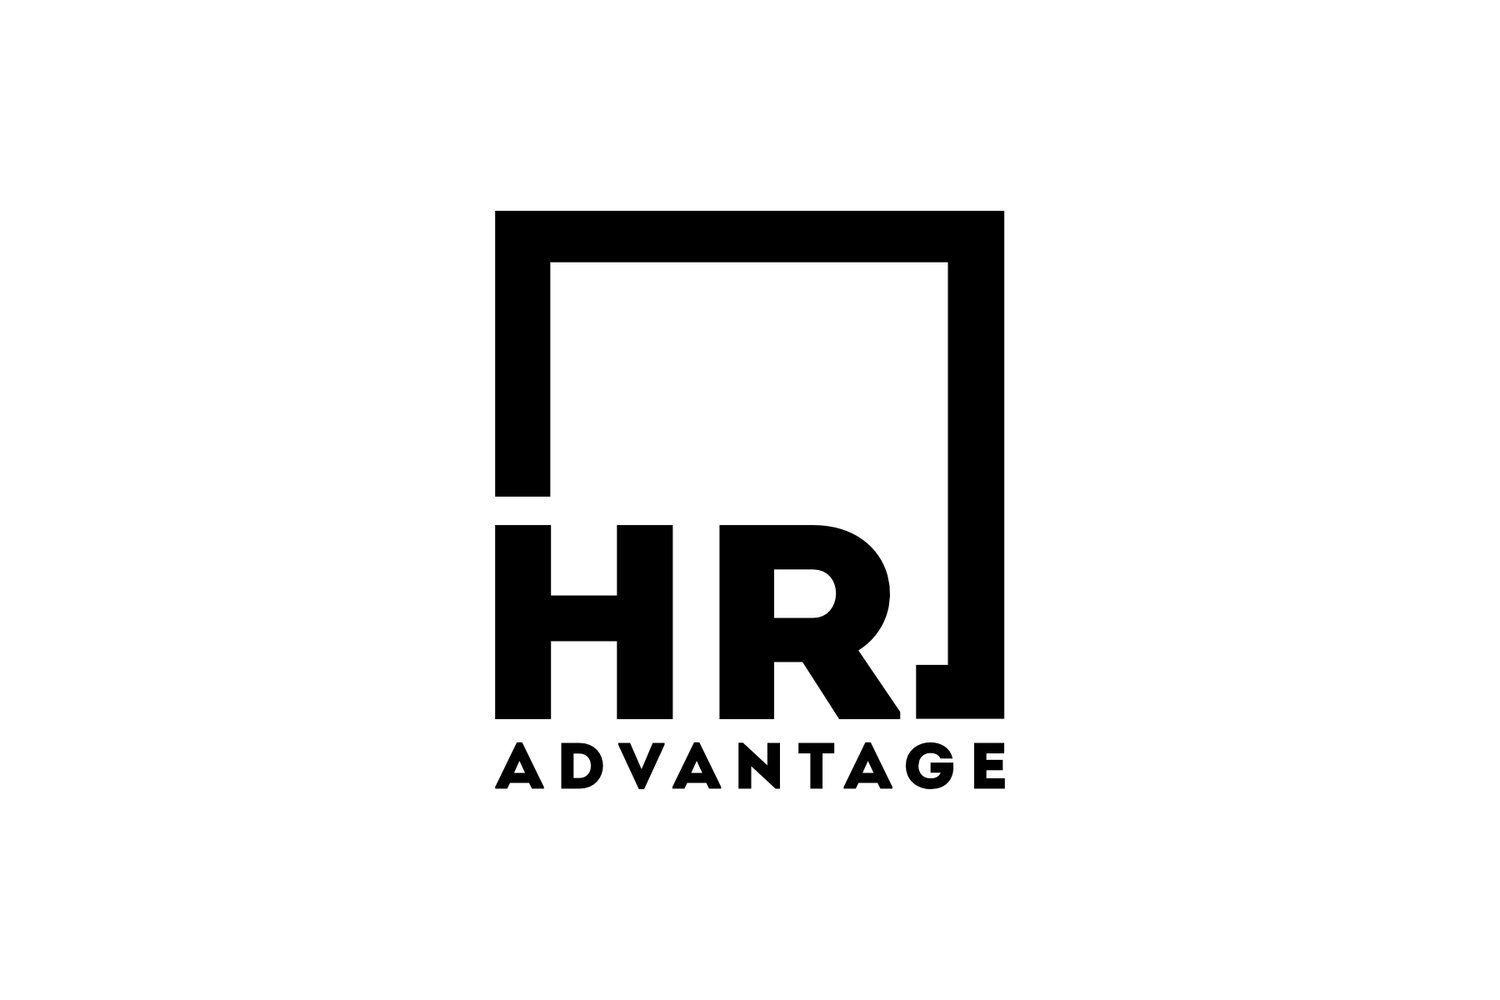 The HR Advantage